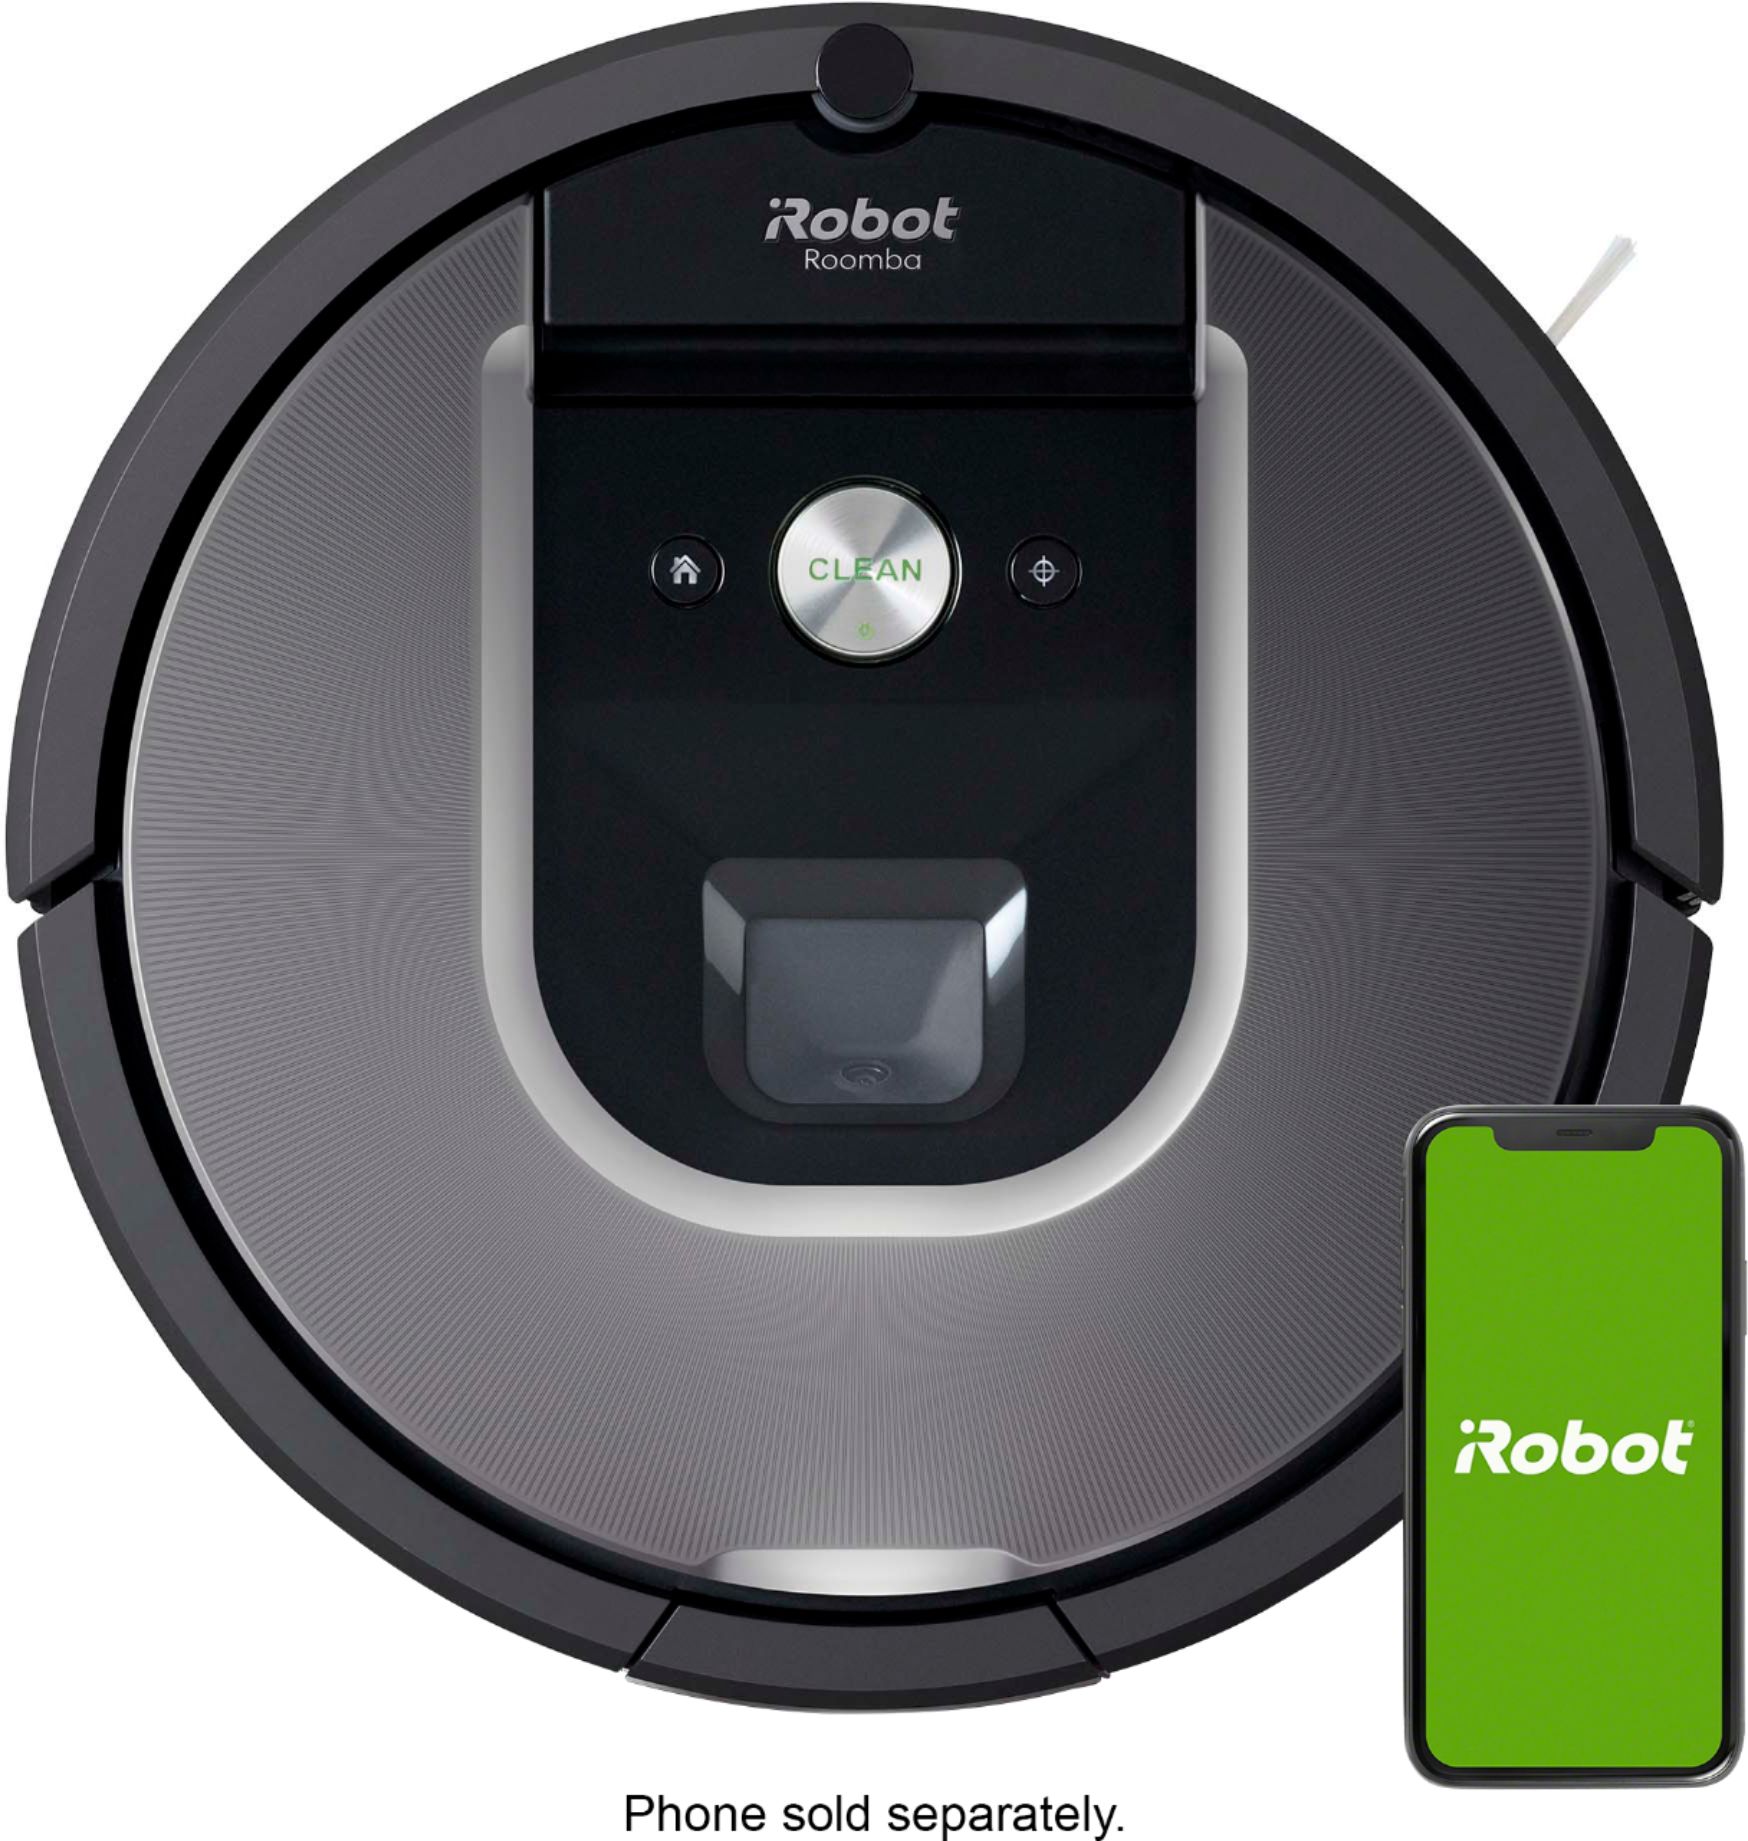 Irobot Roomba 960 Wi Fi Connected Robot, Roomba Hardwood Floor Cleaner Reviews